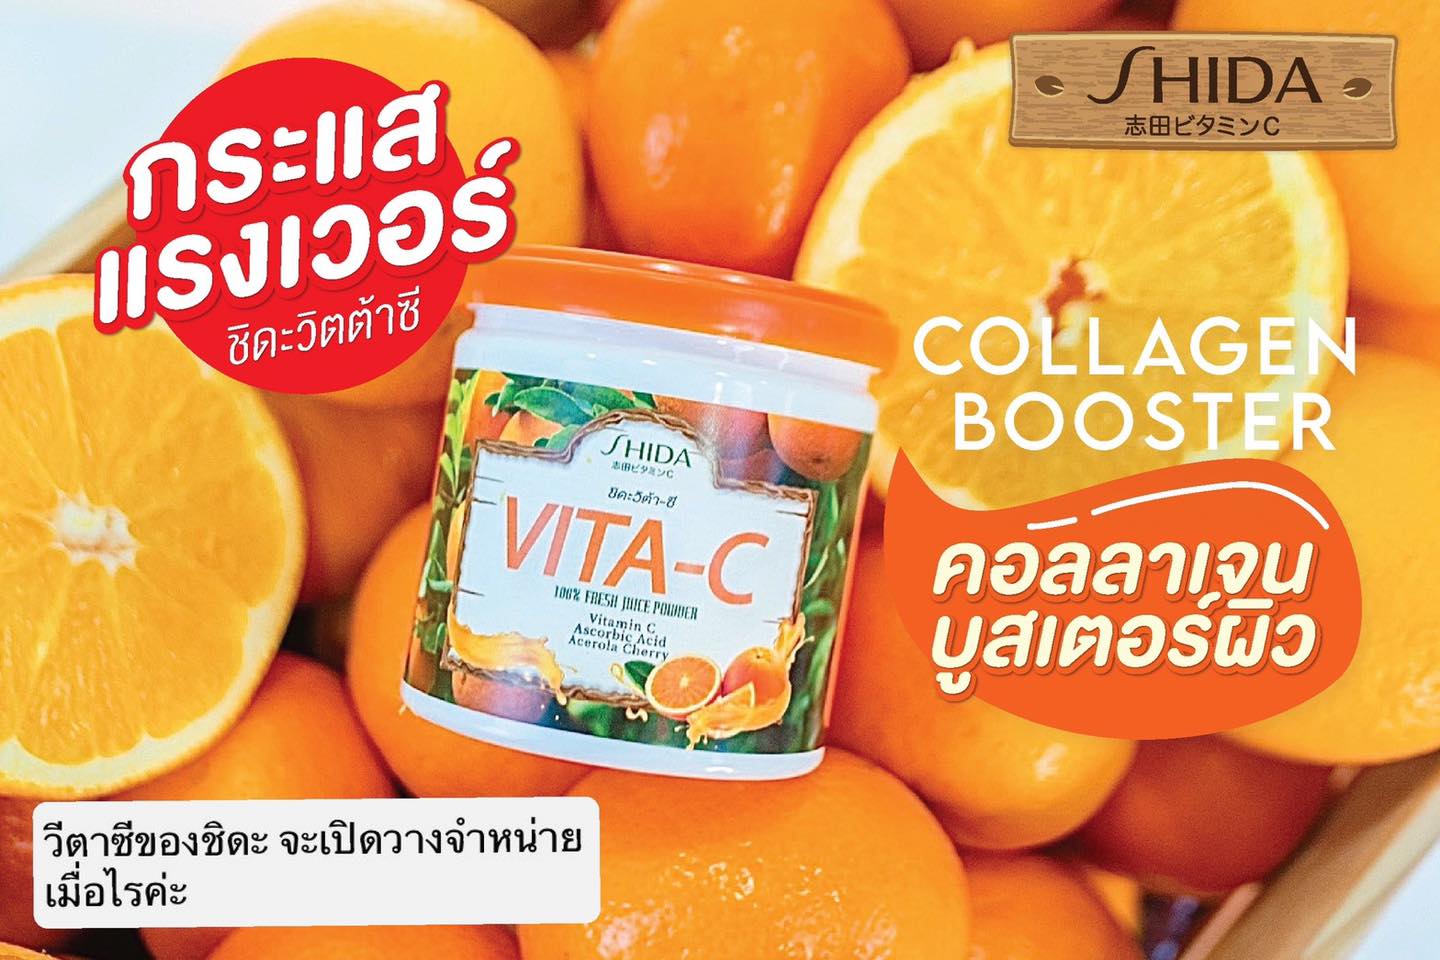 SHIDA VITA-C  ชิดะ วิต้าซี วิตามินซีไฮโดส คอลลาเจนบูสเตอร์ สารสกัดเข้มข้น วิตามินซี100% ส้มสดๆเหมือนเด็ดจากต้น